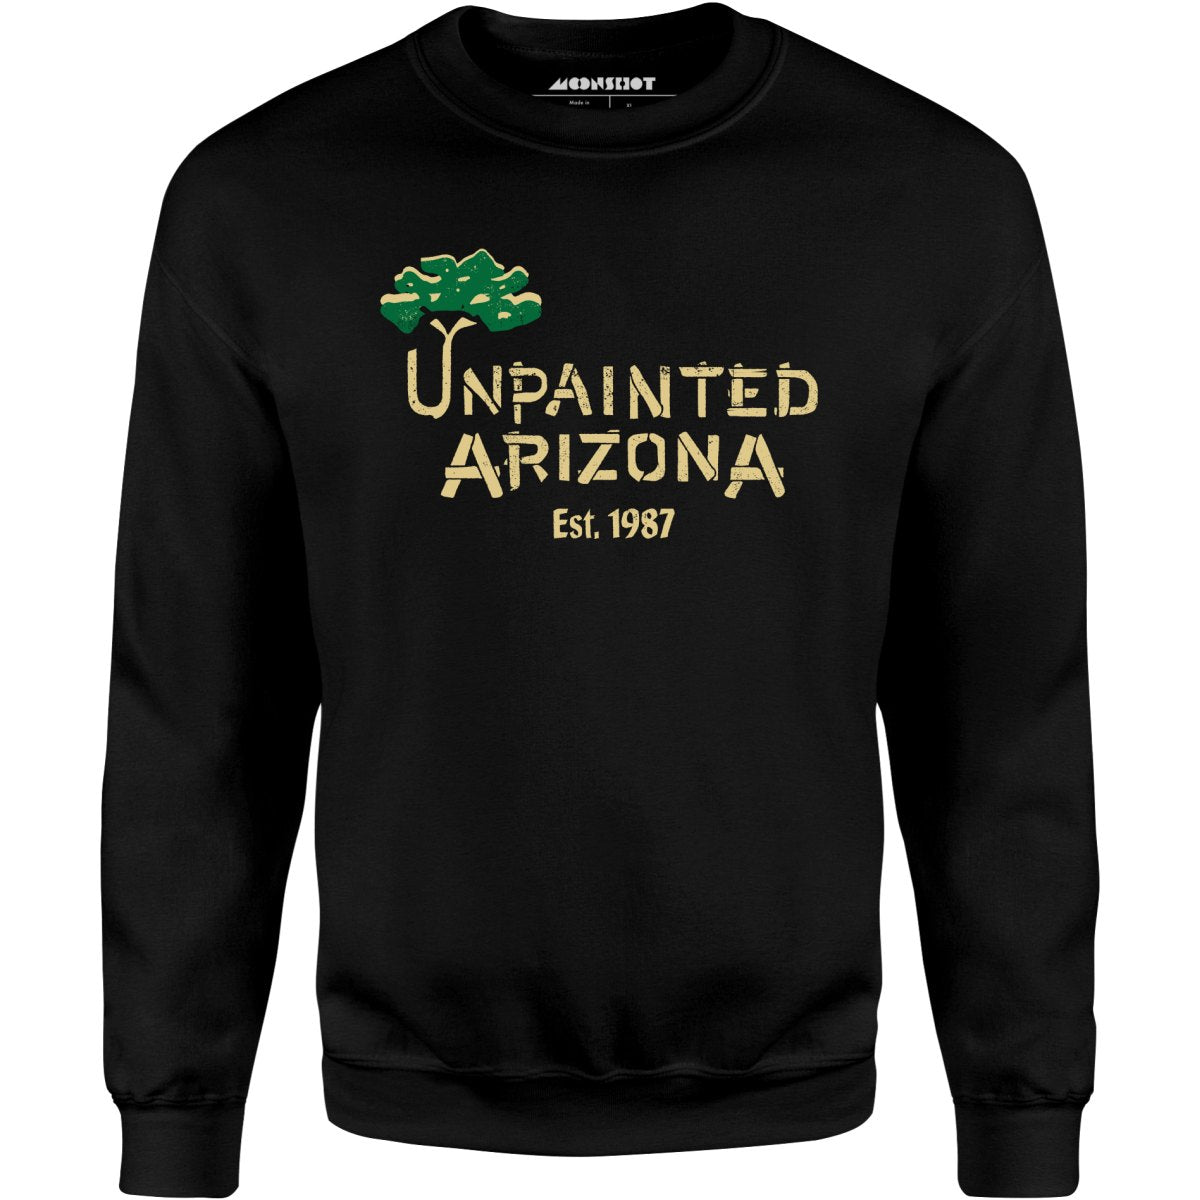 Unpainted Arizona - Unisex Sweatshirt